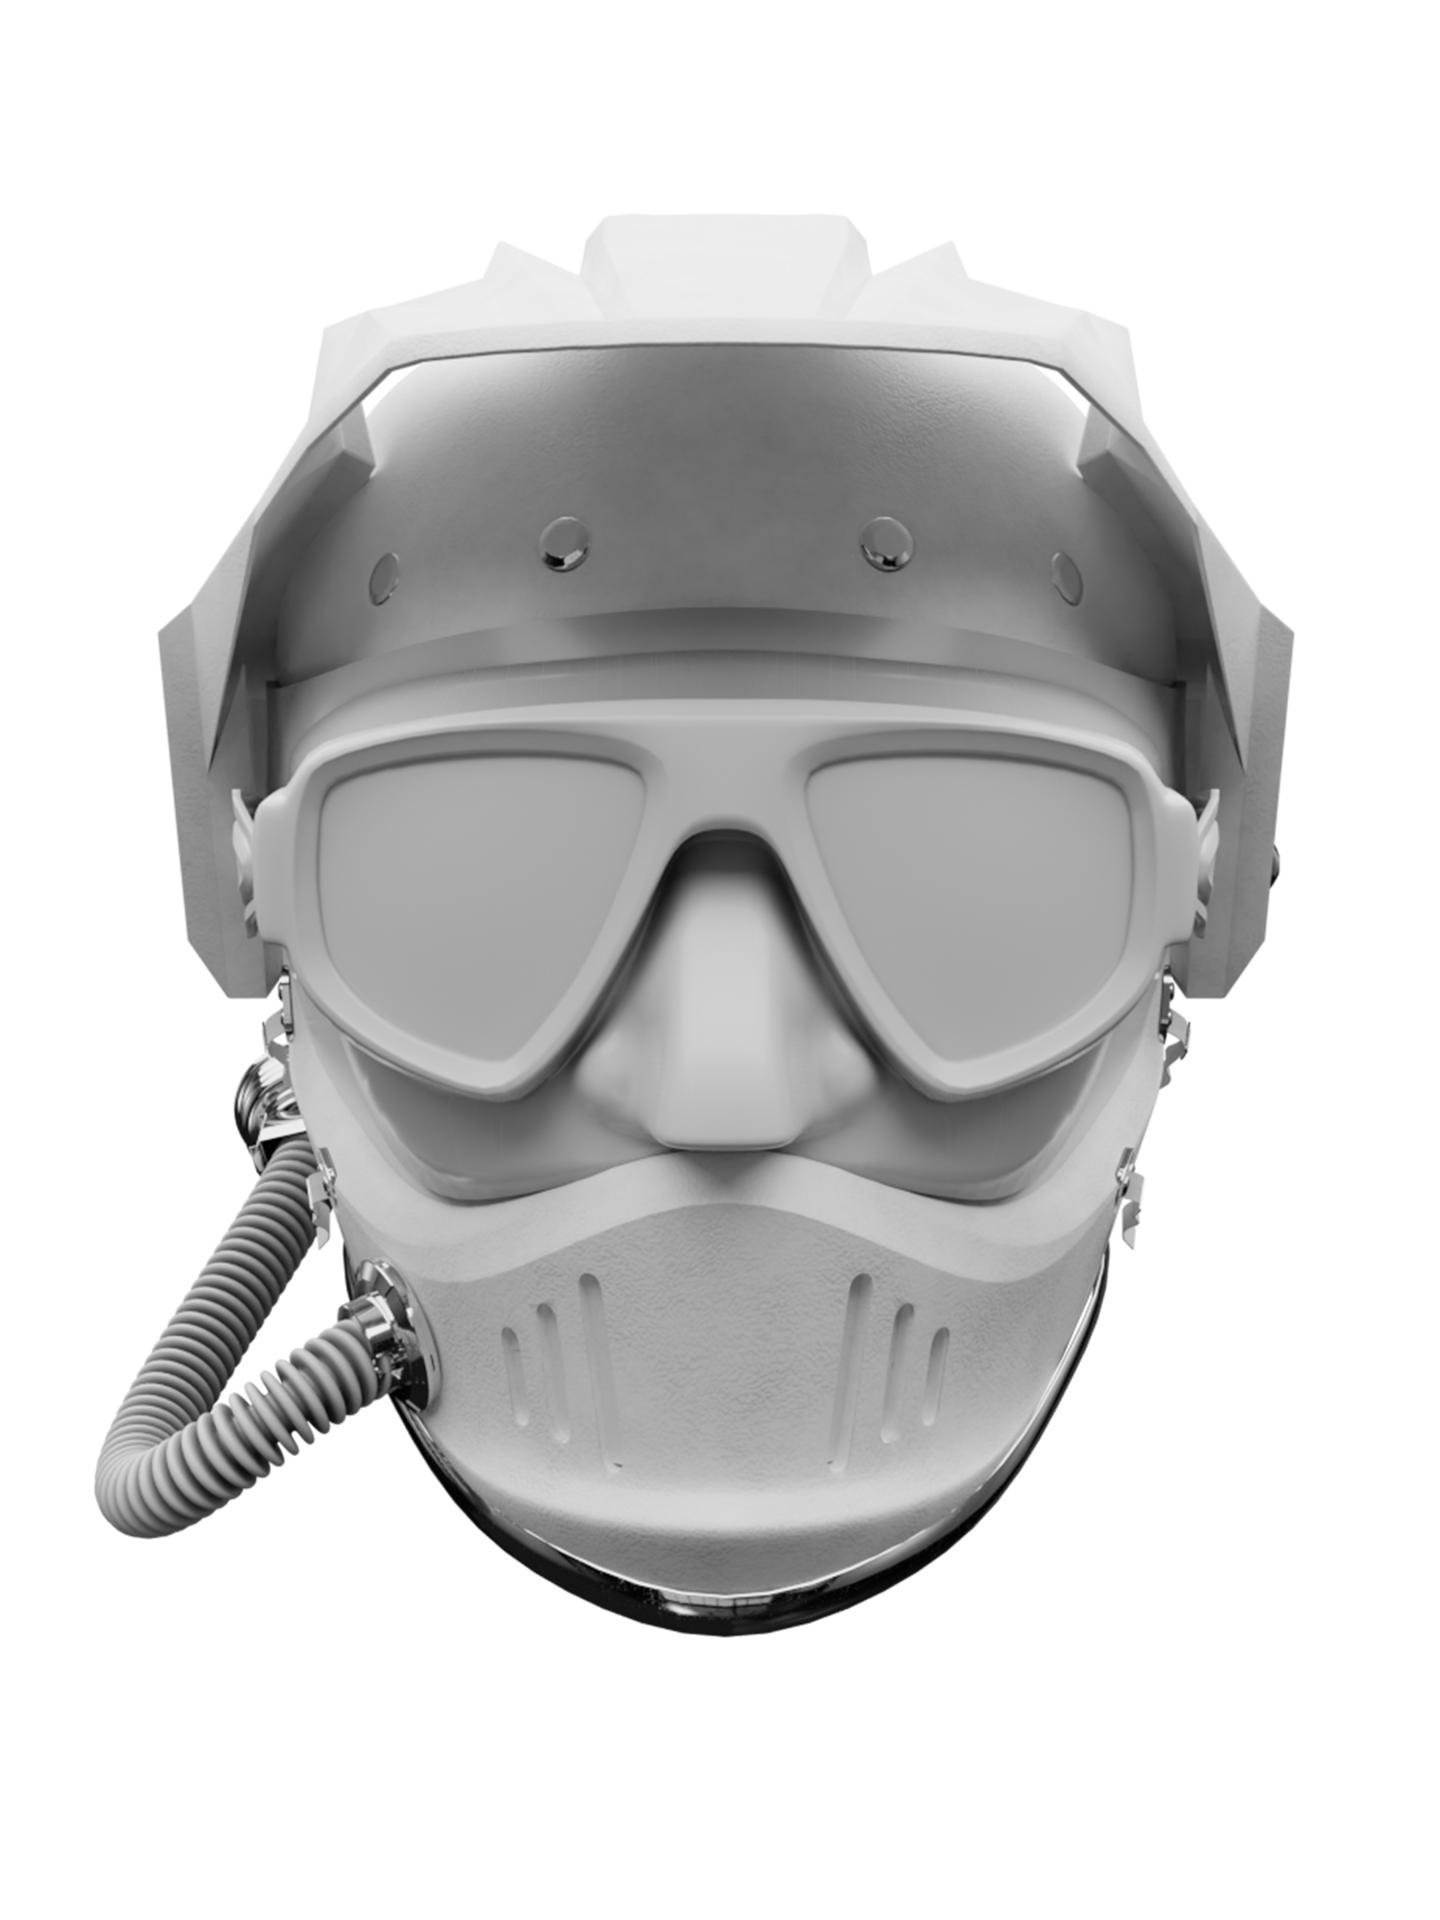 Full Face Helmet Respirator by FABRIX